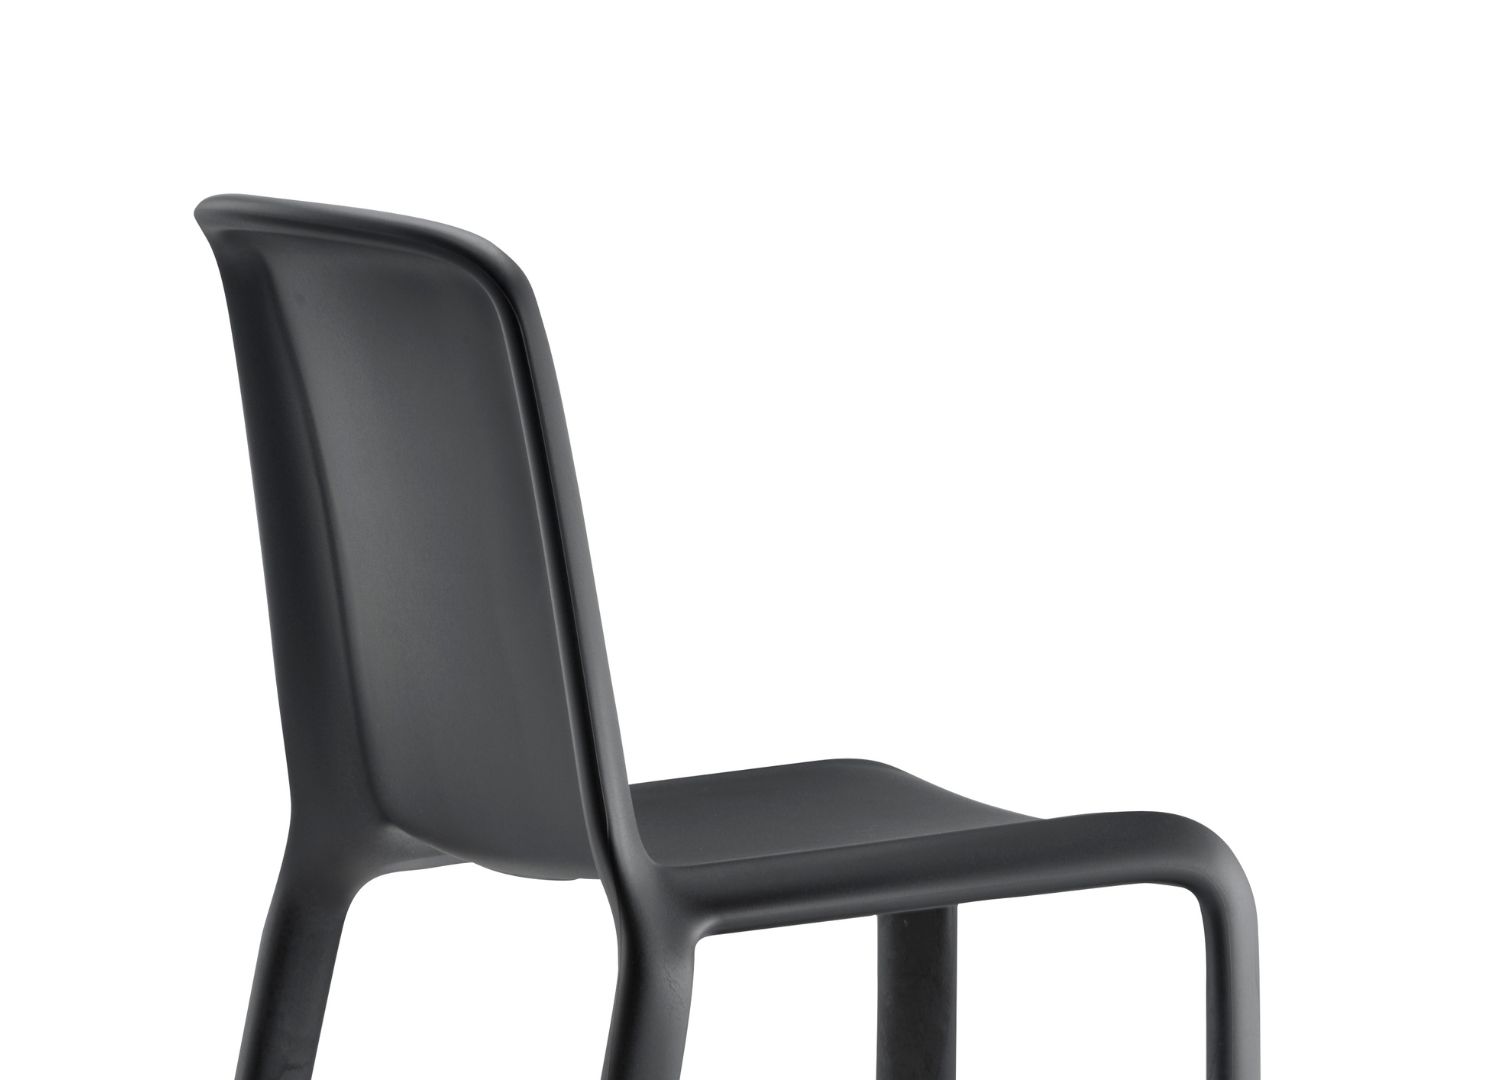 8.-Snow-chair-black-by-Odo-Fioravanti-x-Pedrali-2008